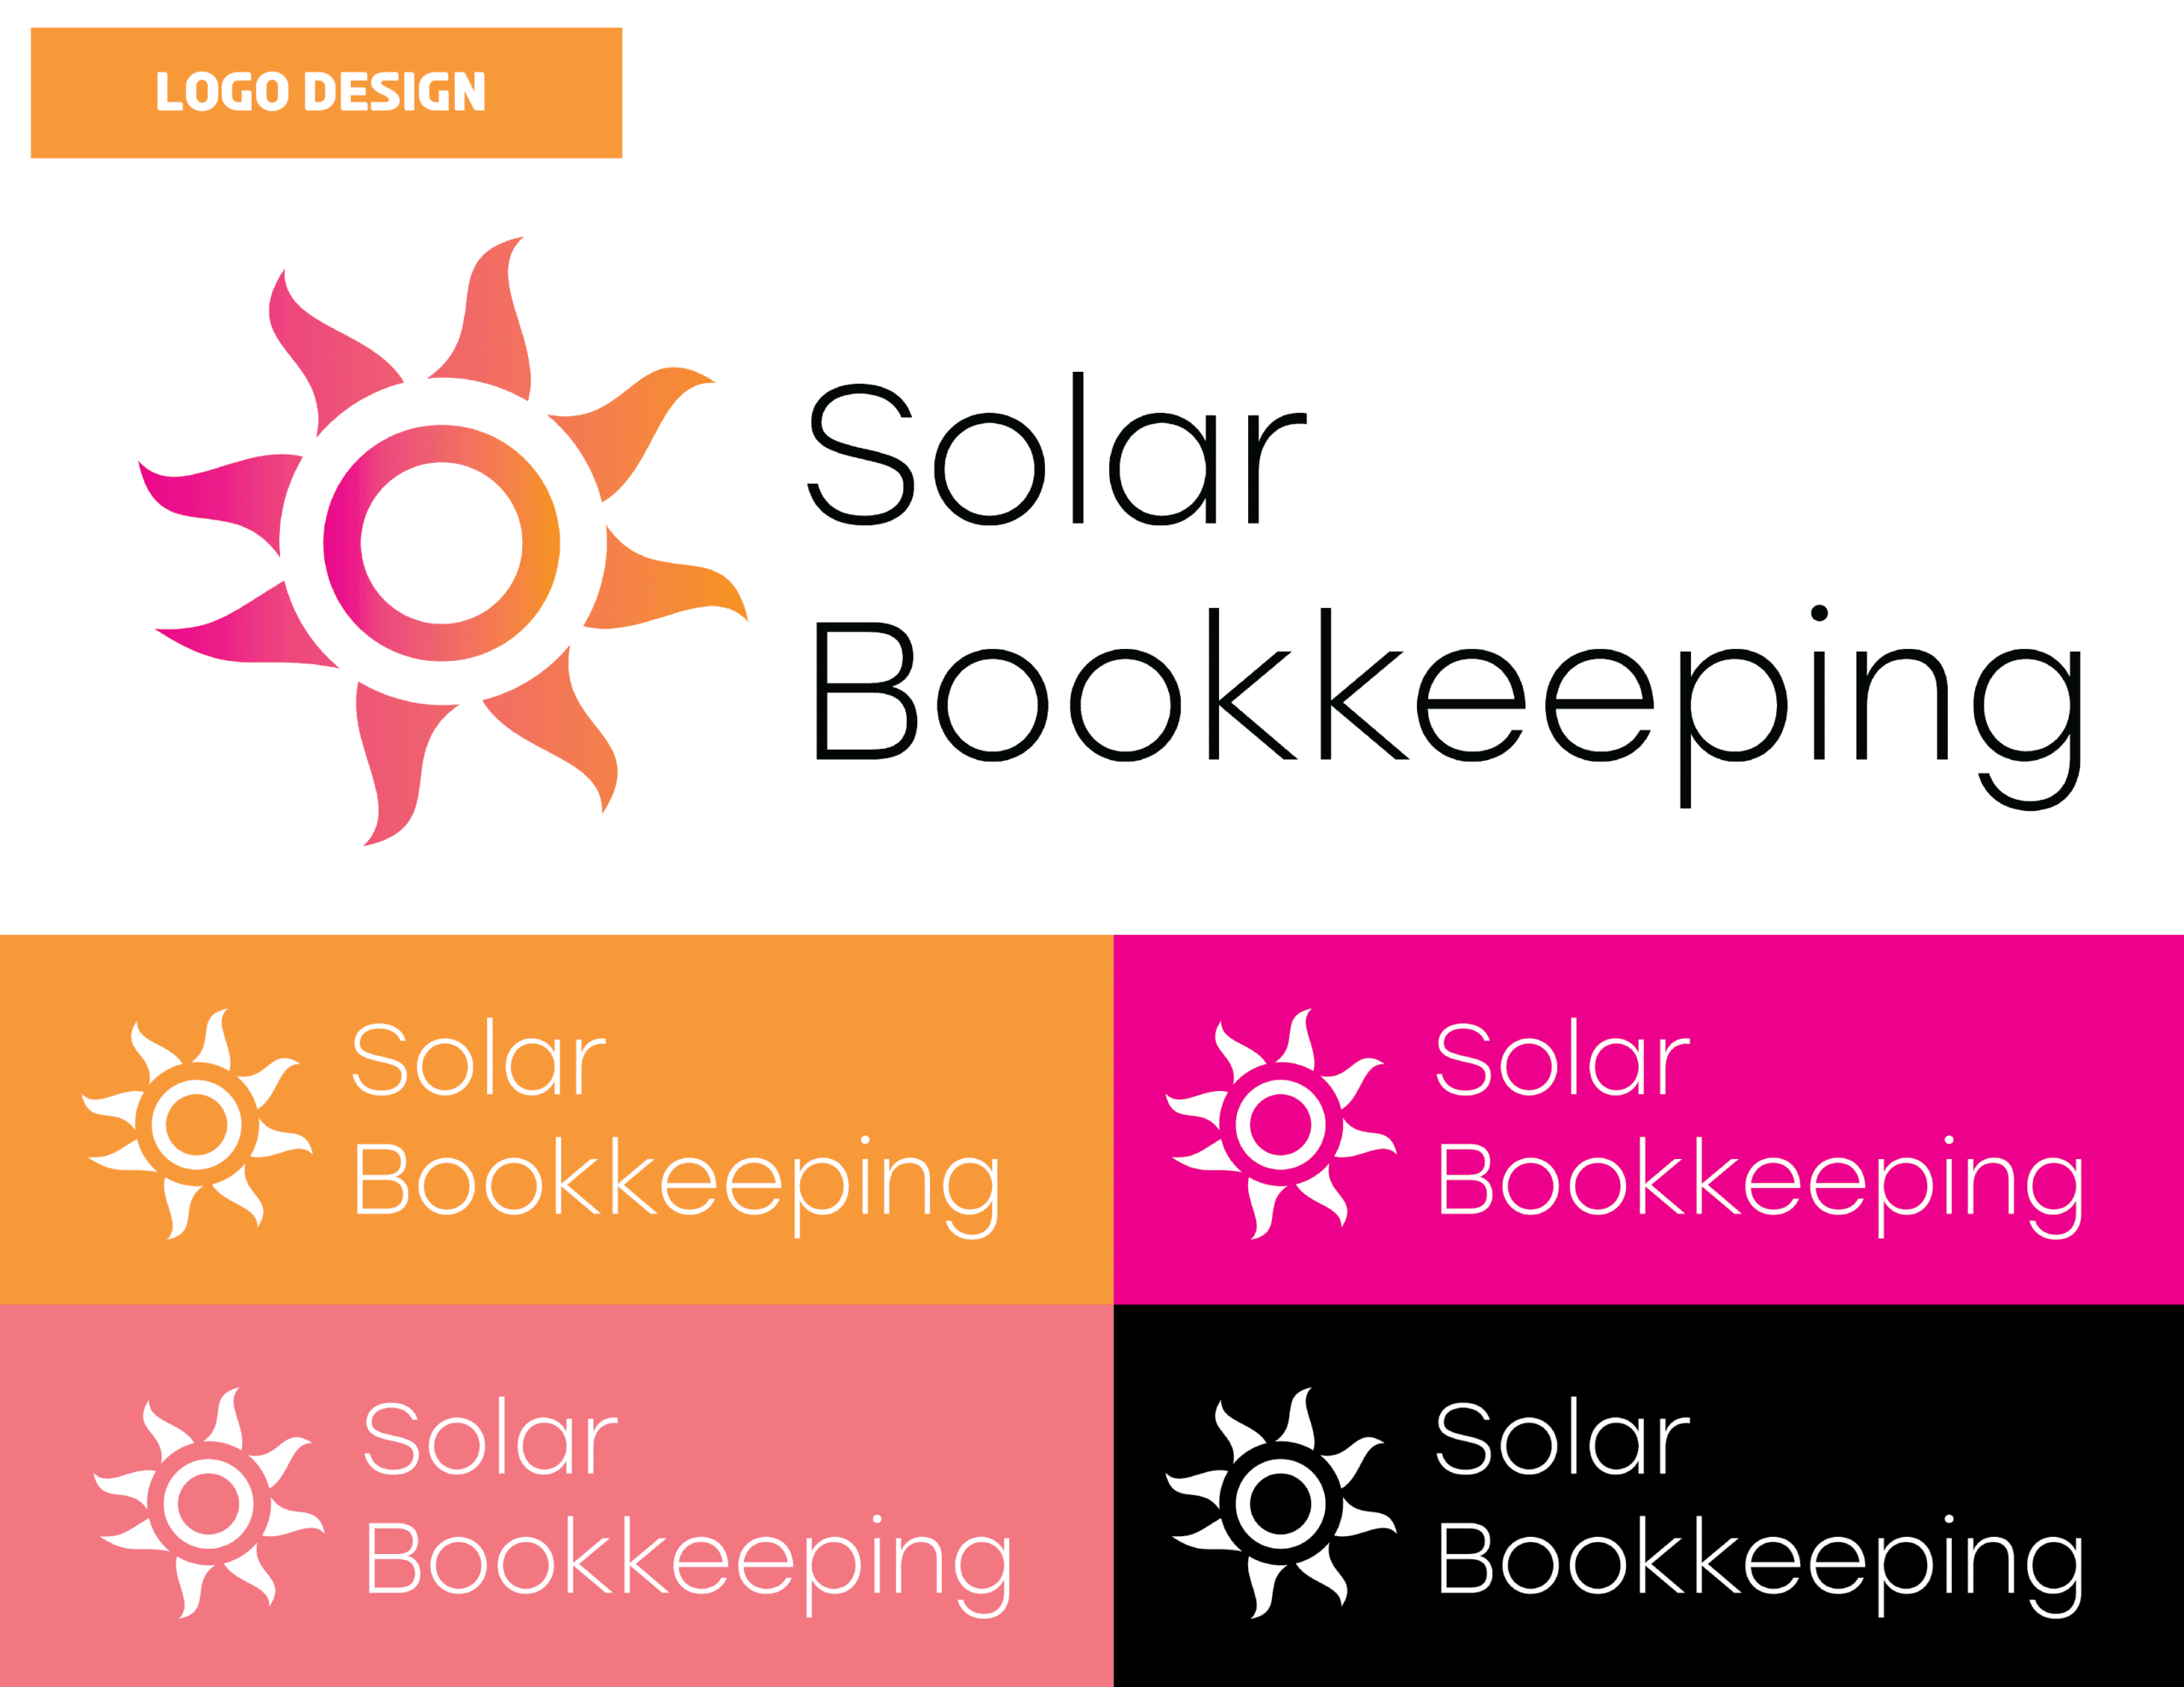 01_SolarBookkeeping_Logo Design